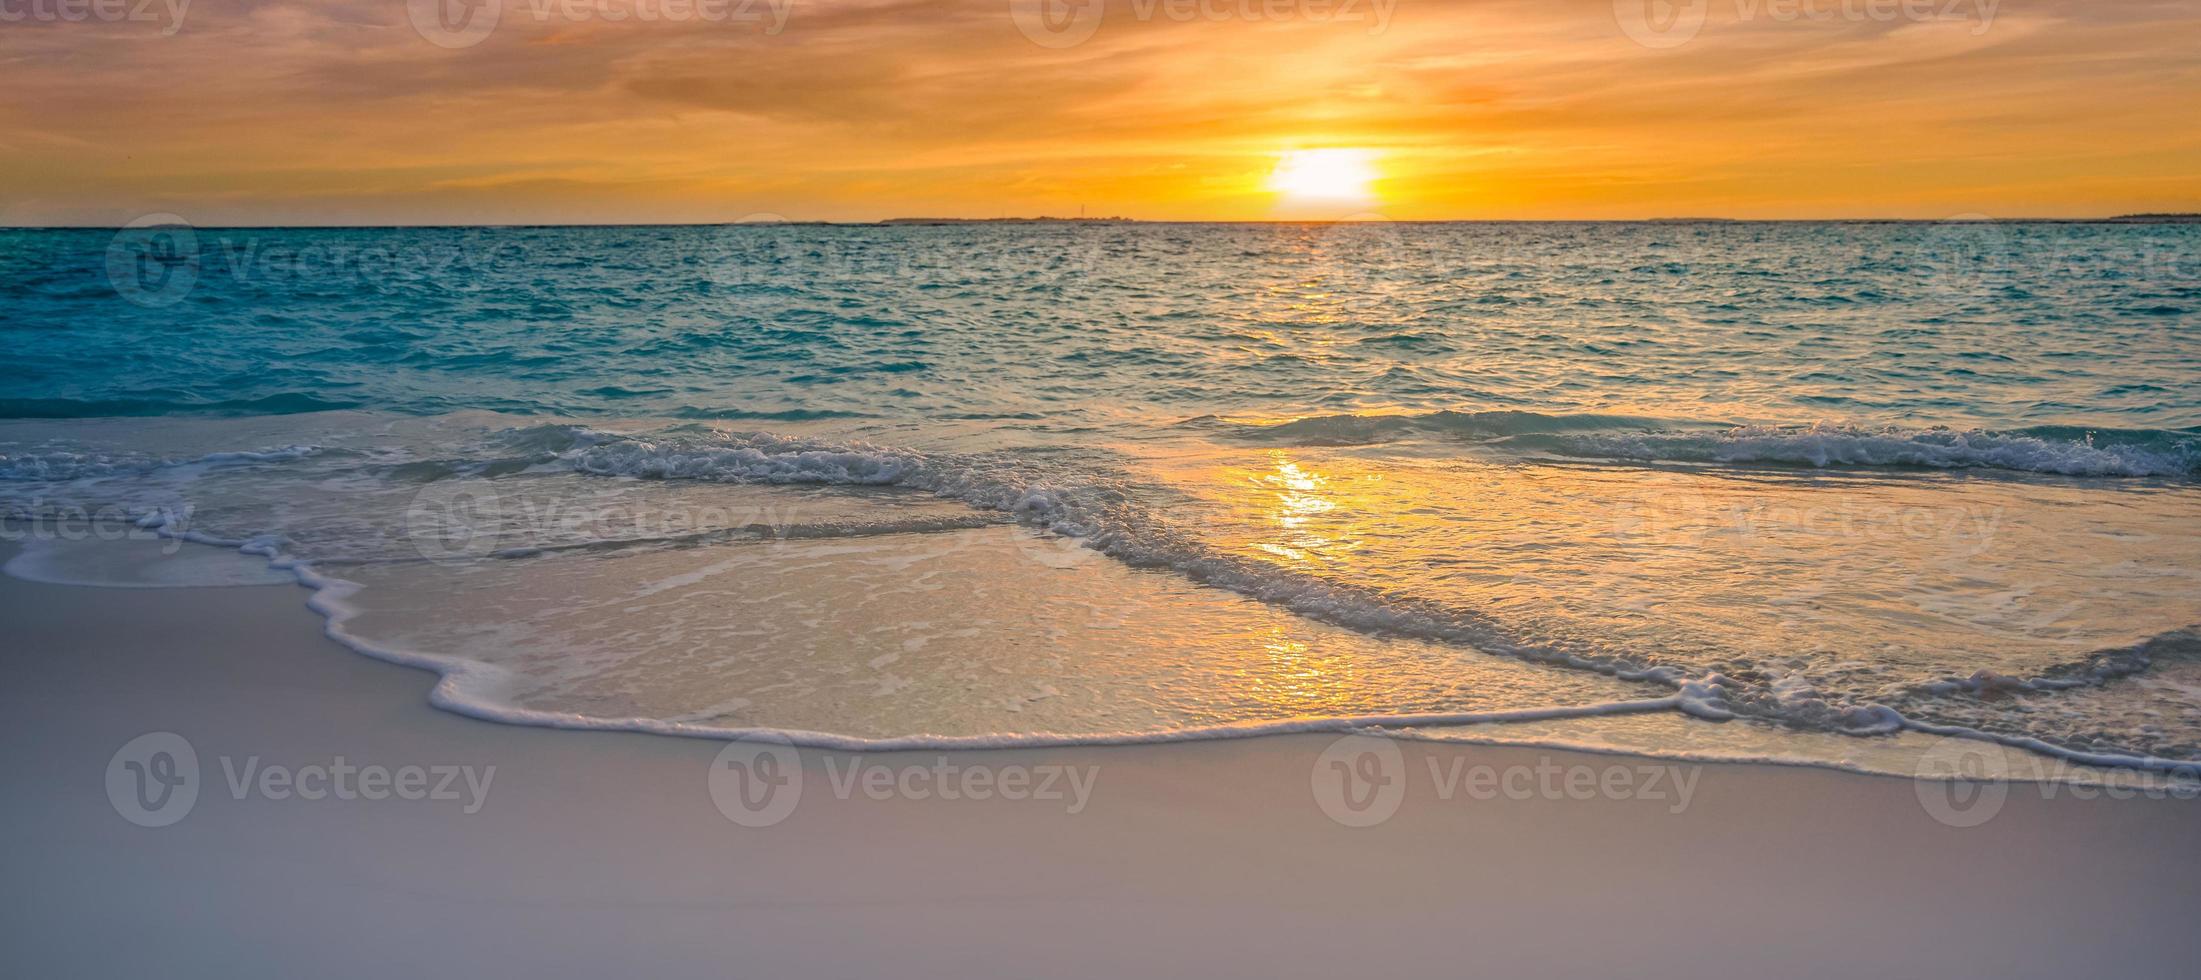 Closeup sea sand beach. Panoramic beach landscape. Inspire tropical beach seascape horizon. Orange and golden sunset sky calmness tranquil relaxing sunlight summer mood. Vacation travel holiday banner photo